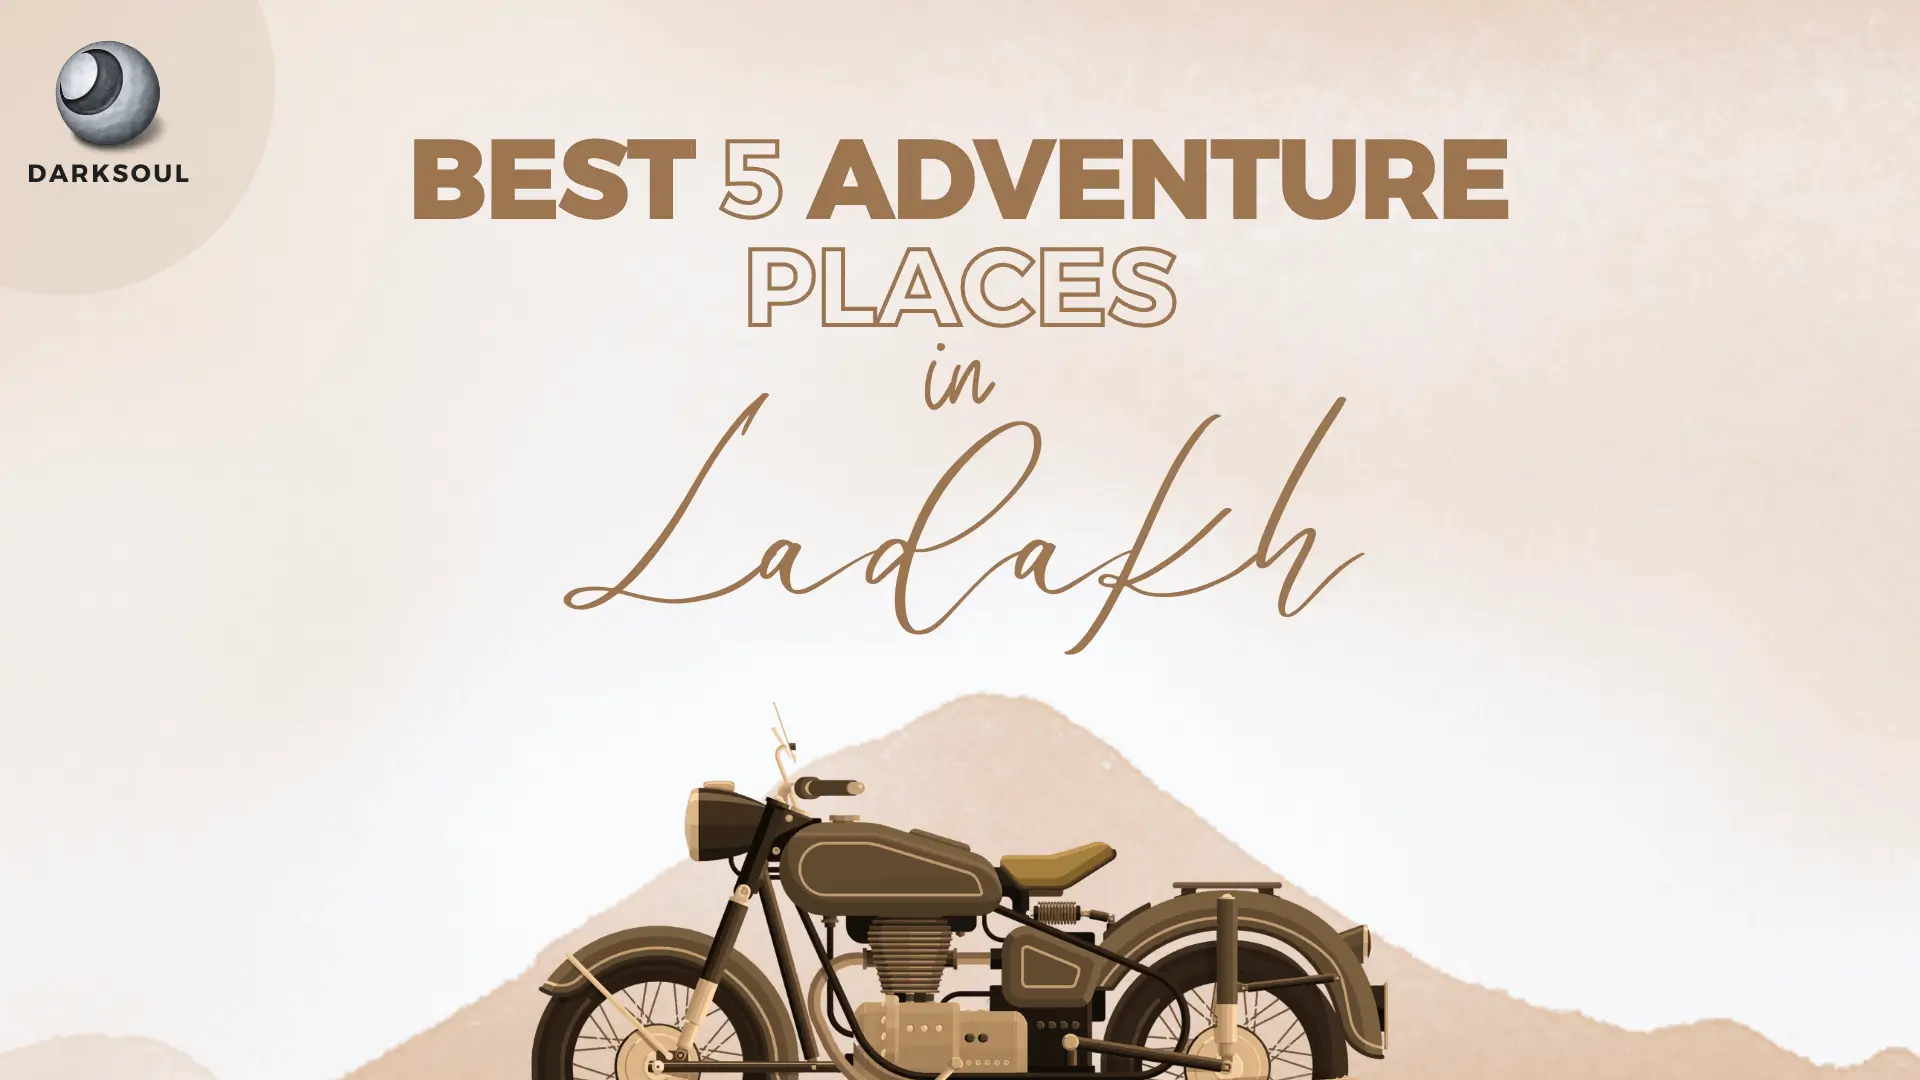 Best 5 Adventure Places in Ladakh - cover image